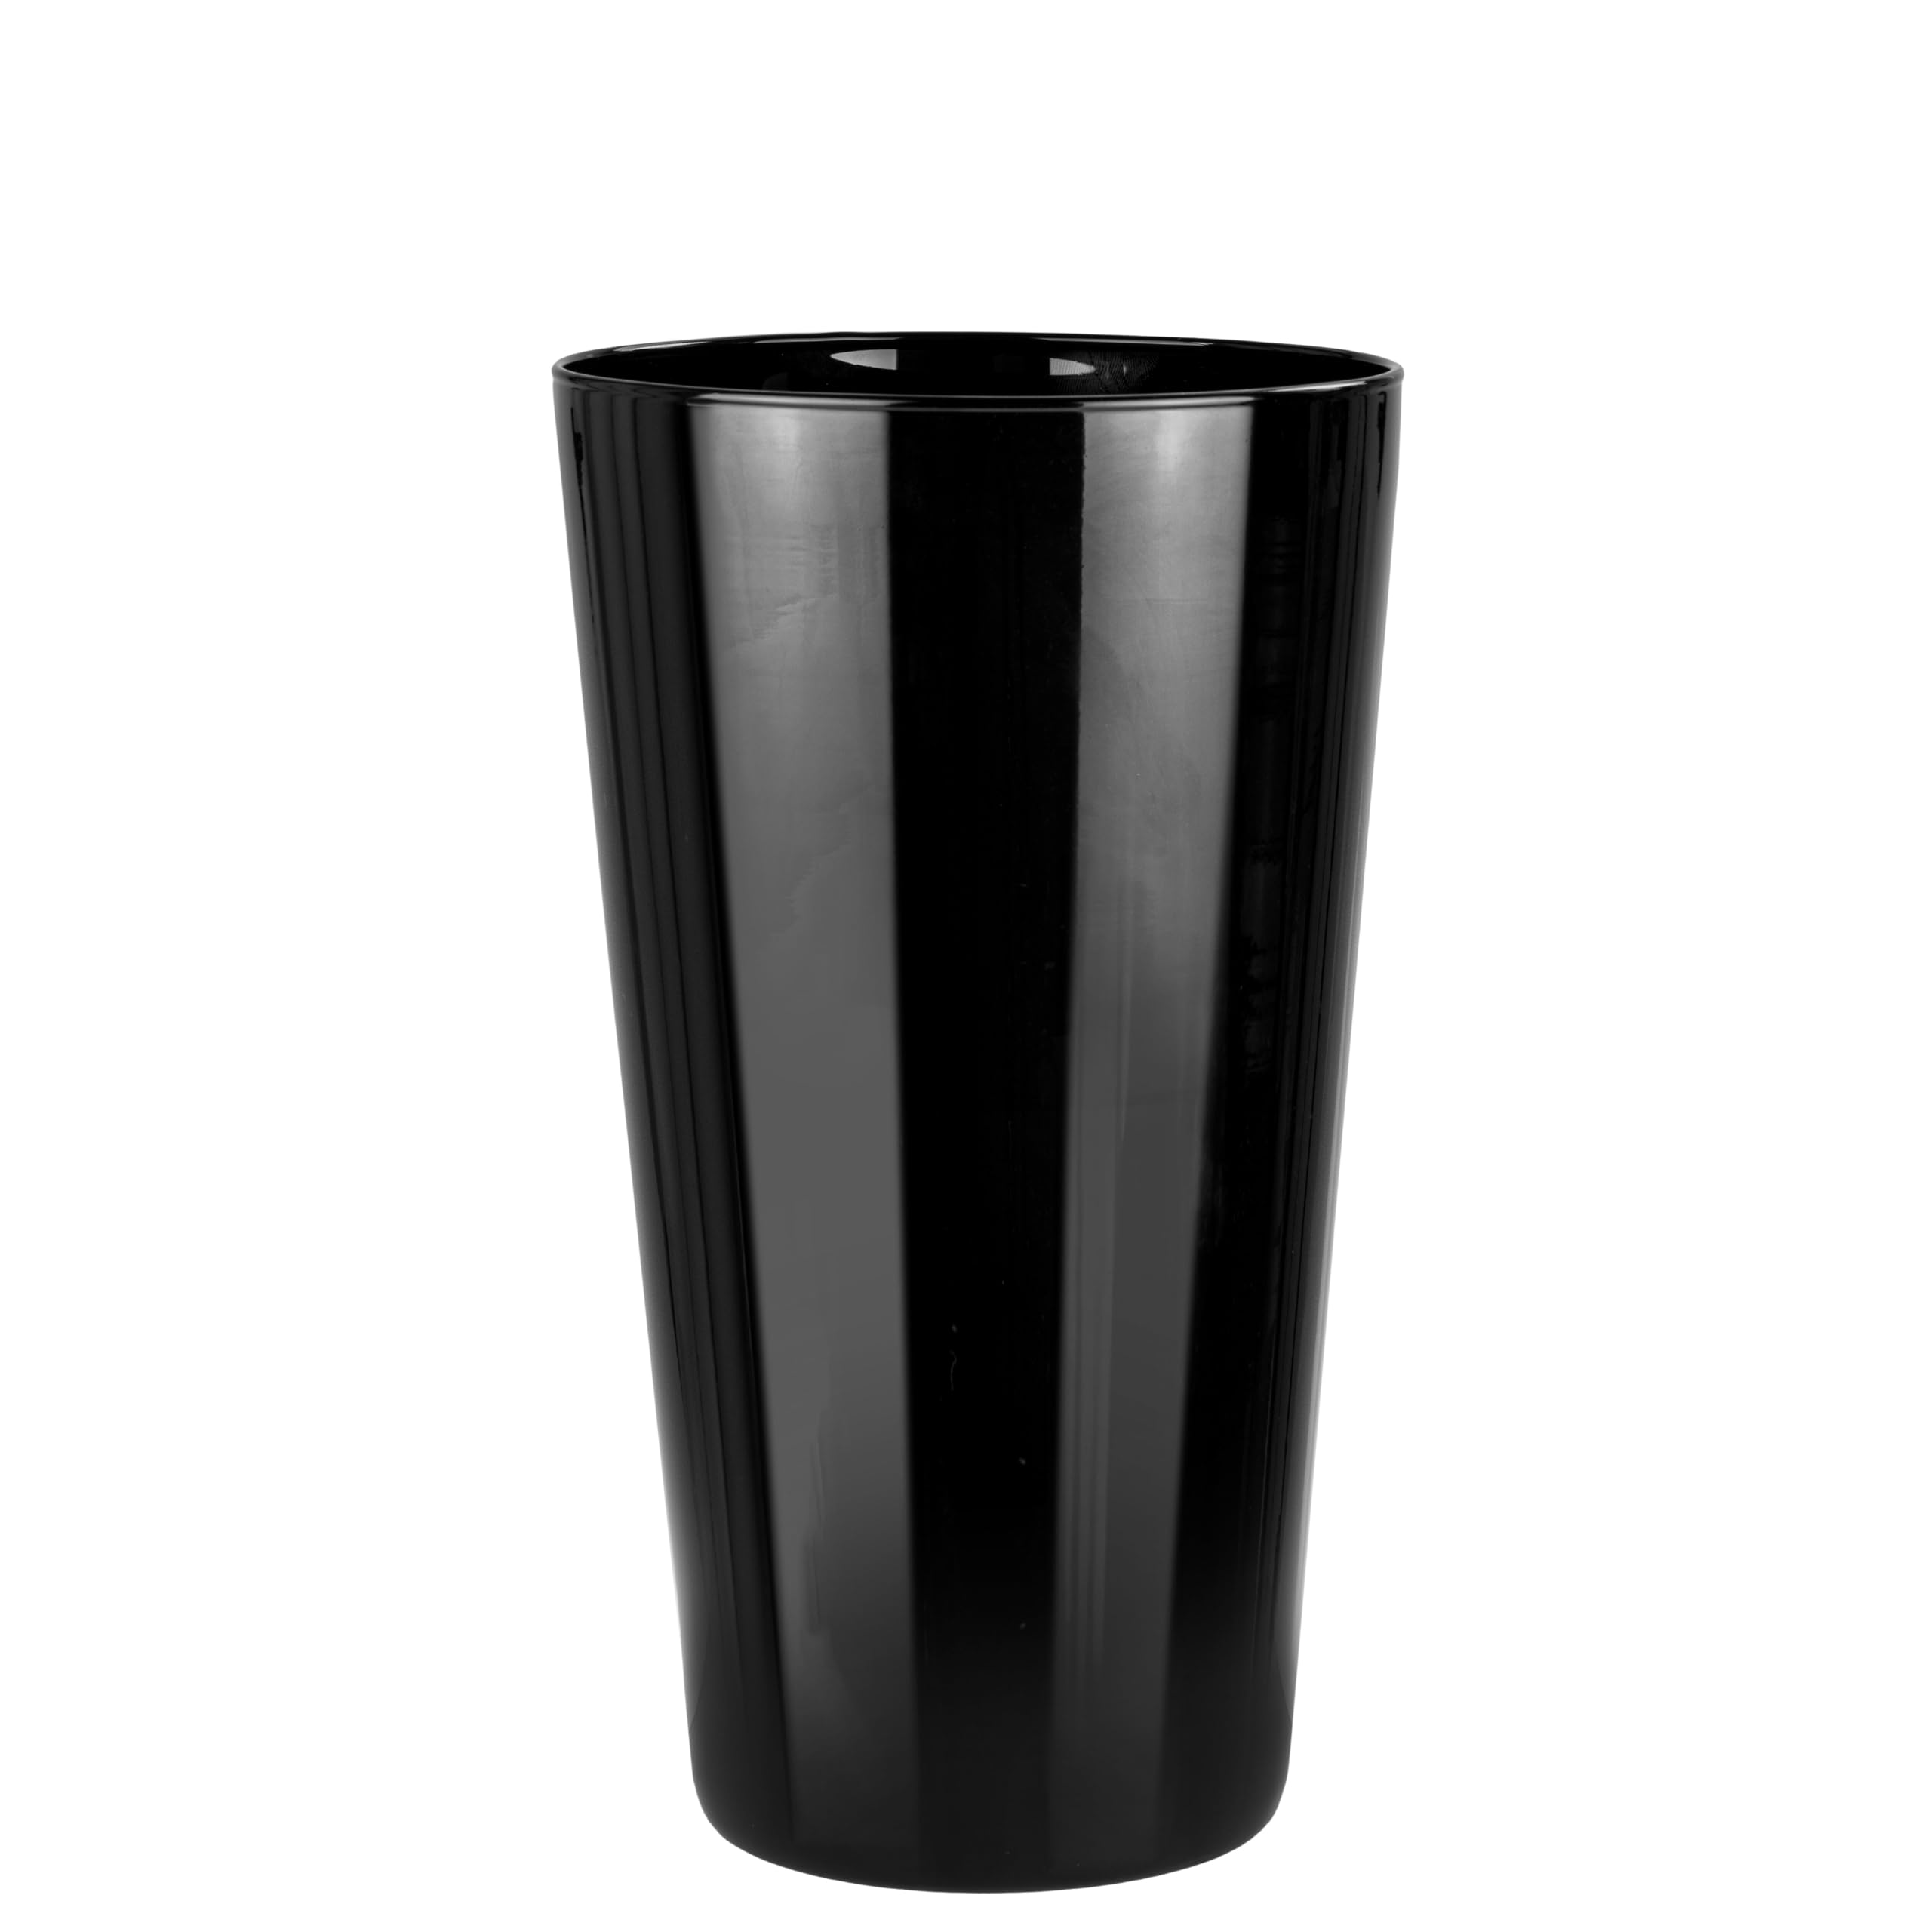 Promo TREND FOR HOME Vase Decoratif H: 25 cm Vase Noir 